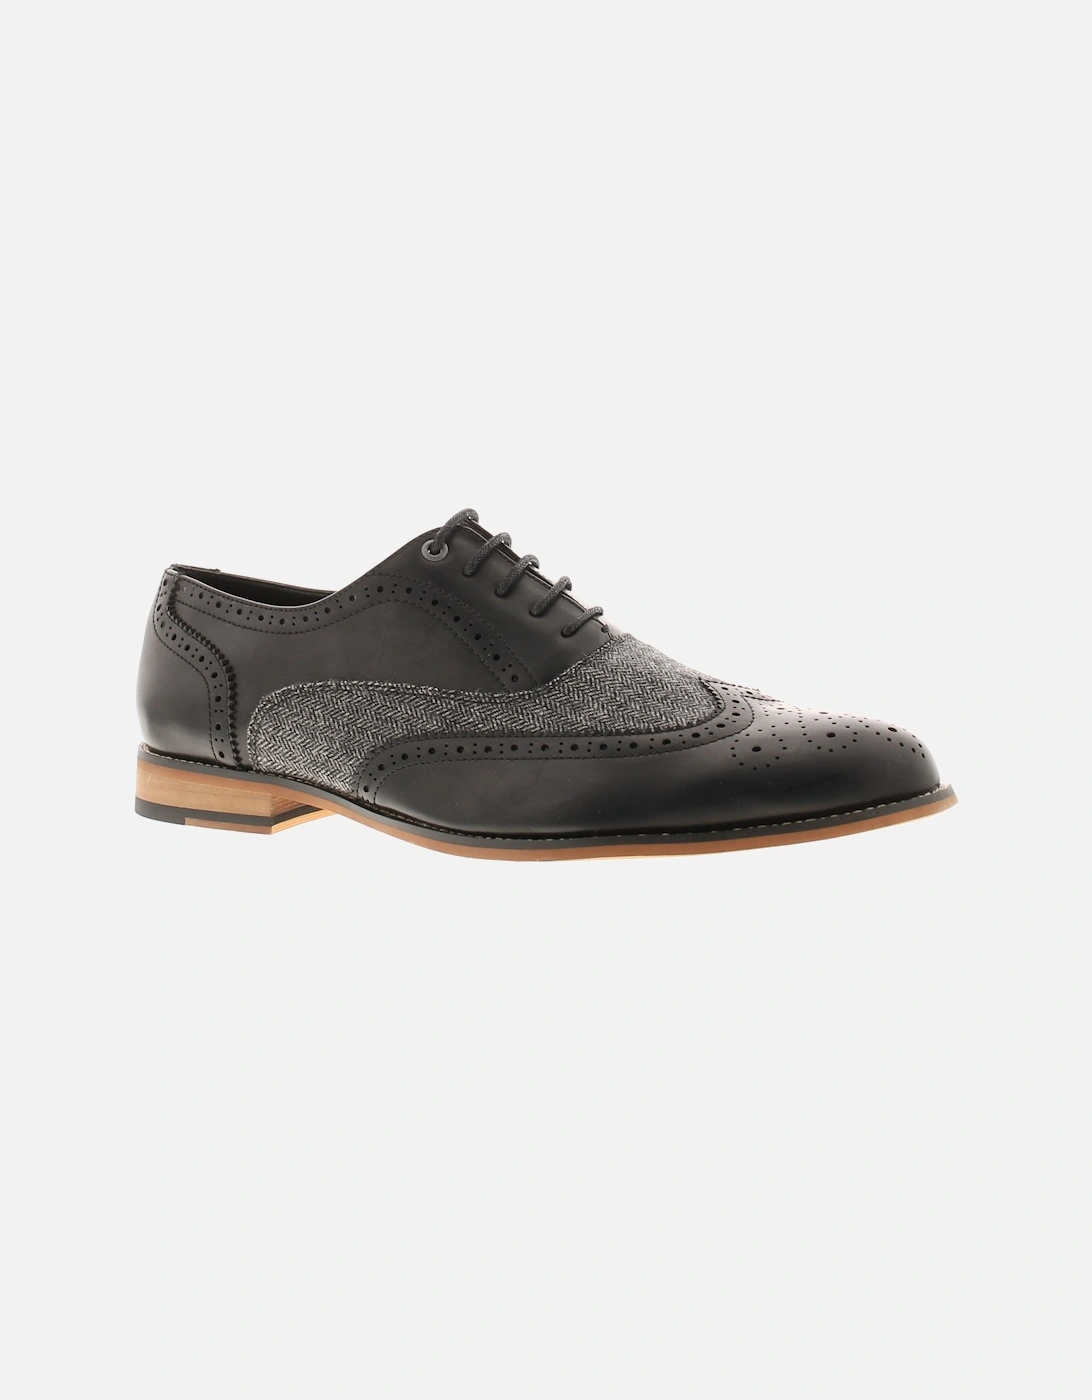 Mens Brogue Shoes Brunswick Oxford Patterned Toe Upper Black UK Size, 6 of 5